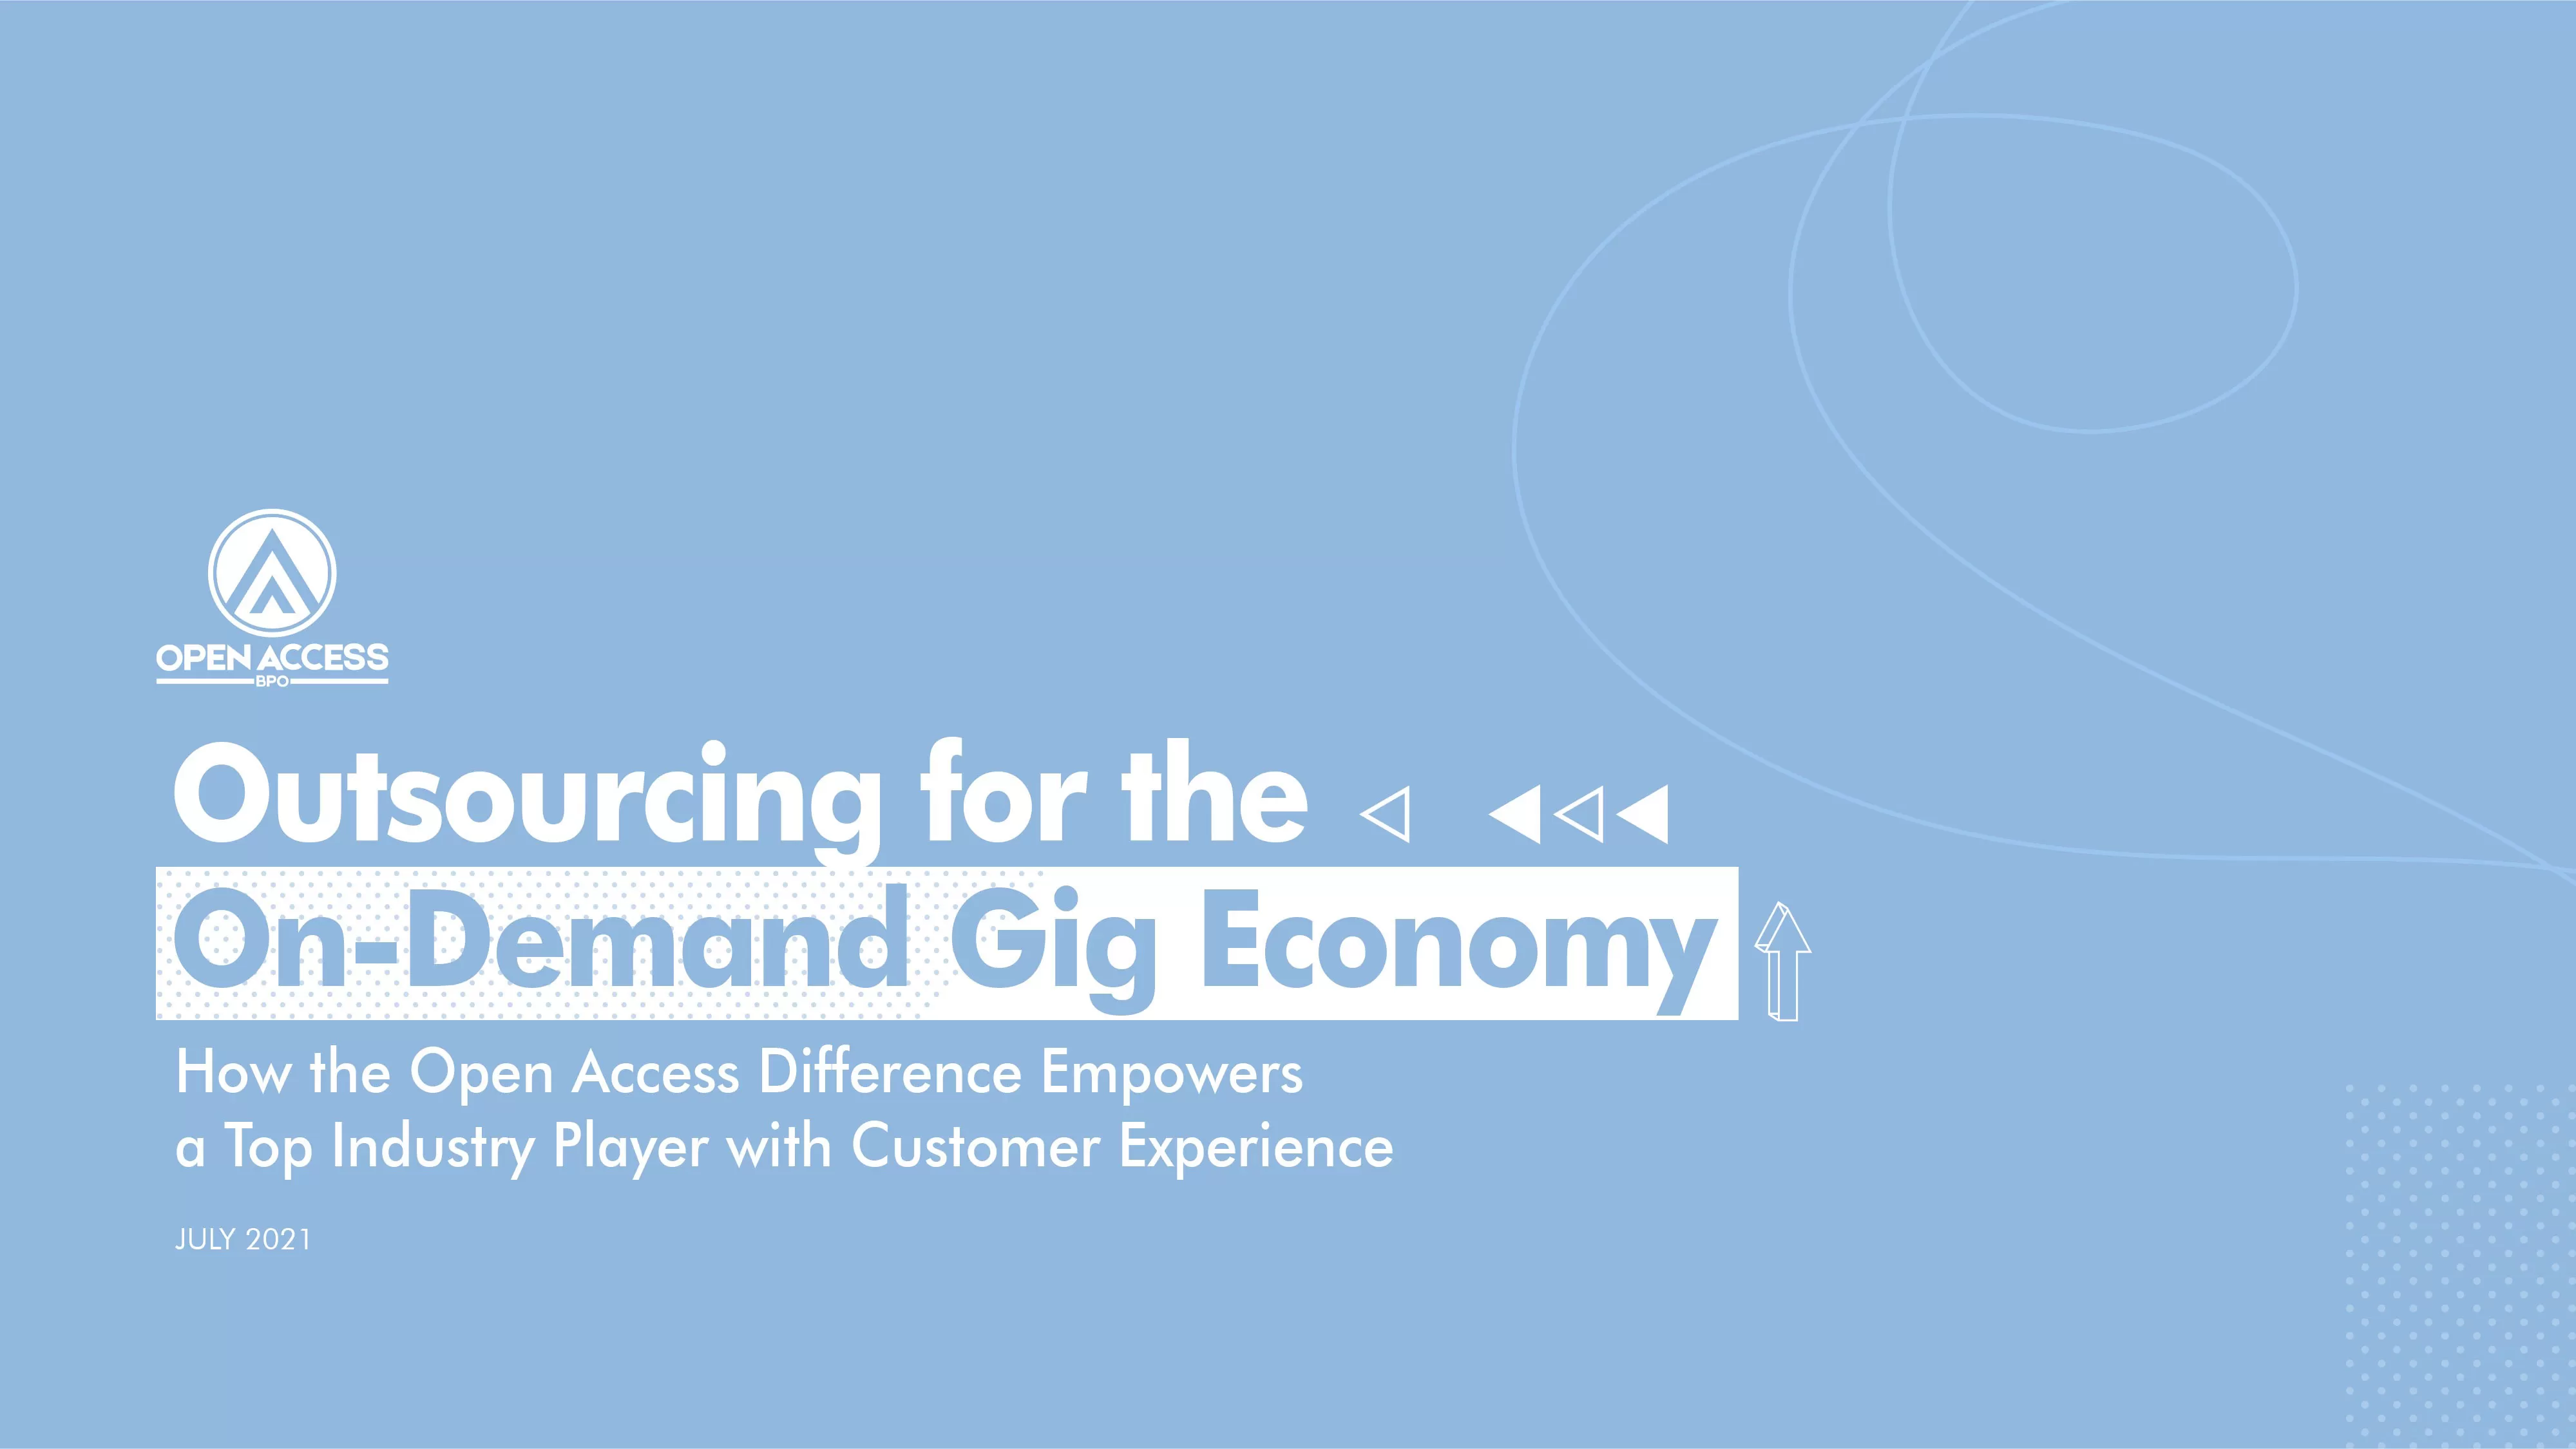 Open Access BPO Gig Economy outsourcing case study